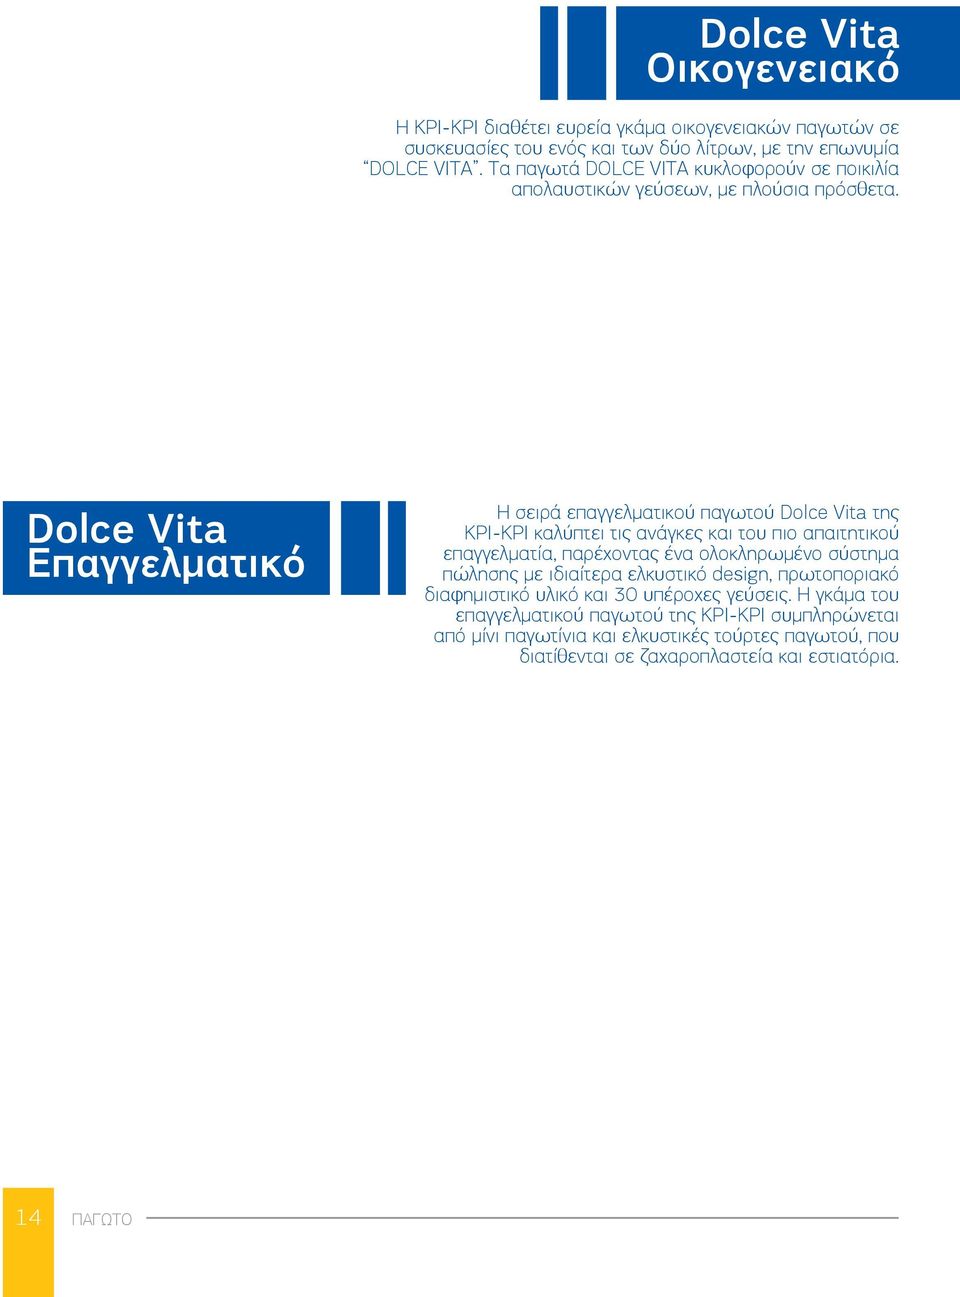 Dolce Vita Επαγγελματικό Η σειρά επαγγελματικού παγωτού Dolce Vita της ΚΡΙ-ΚΡΙ καλύπτει τις ανάγκες και του πιο απαιτητικού επαγγελματία, παρέχοντας ένα ολοκληρωμένο